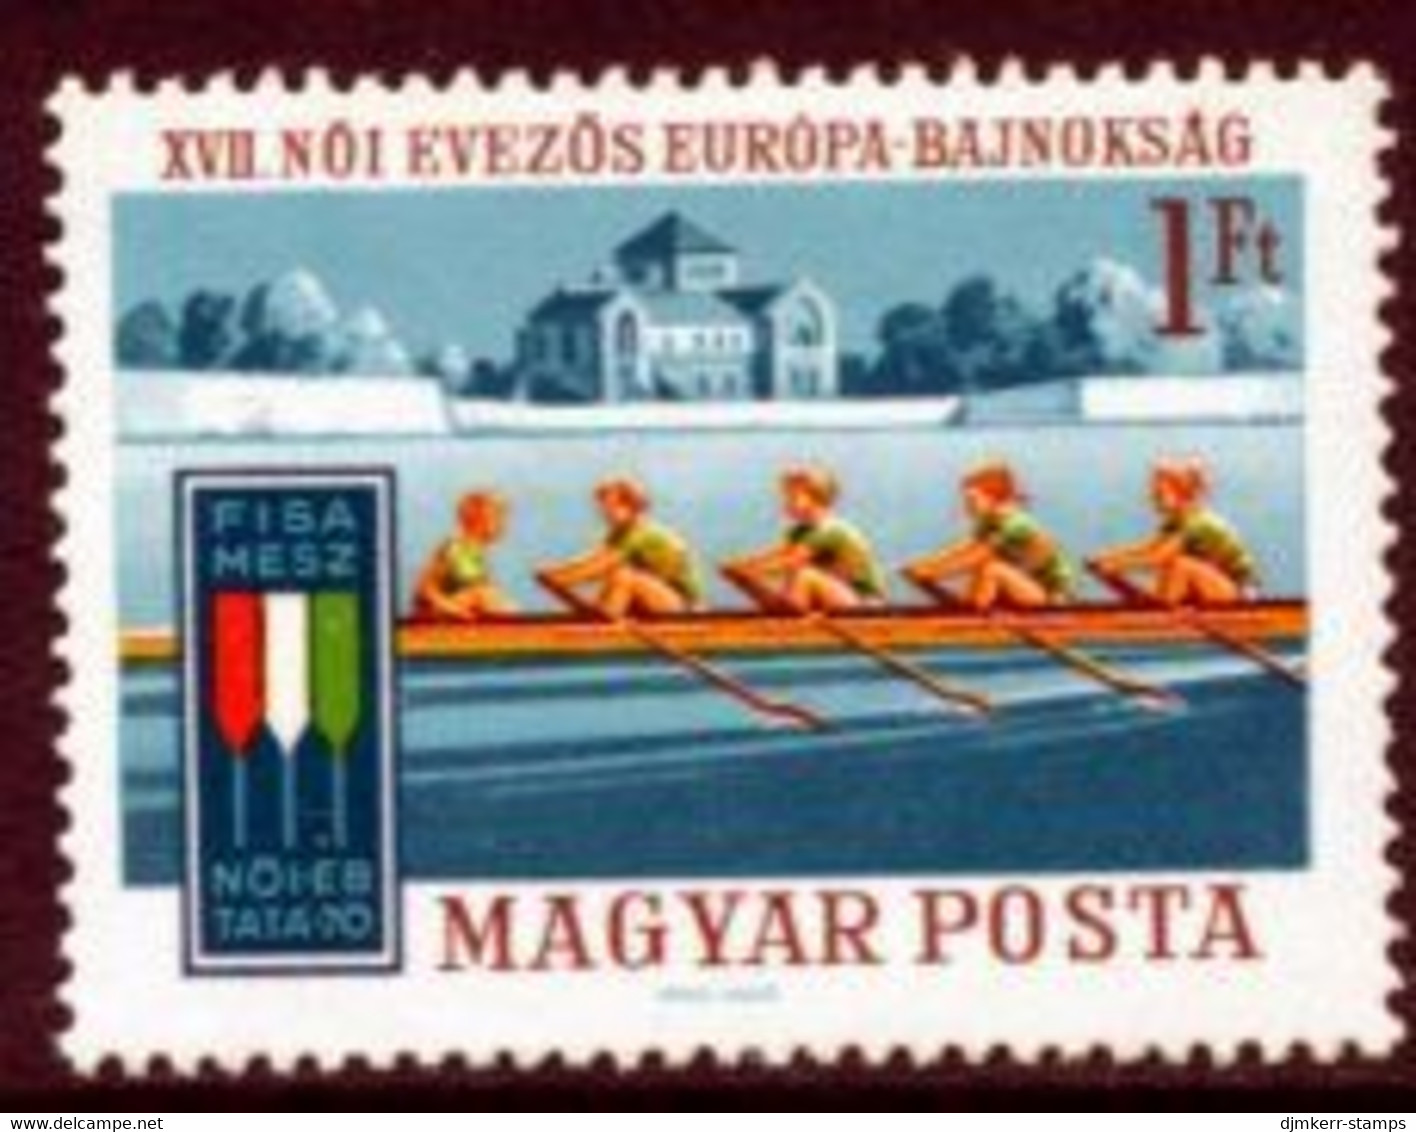 HUNGARY 1970  Women's Rowing Championship MNH / **.  Michel 2601 - Ungebraucht